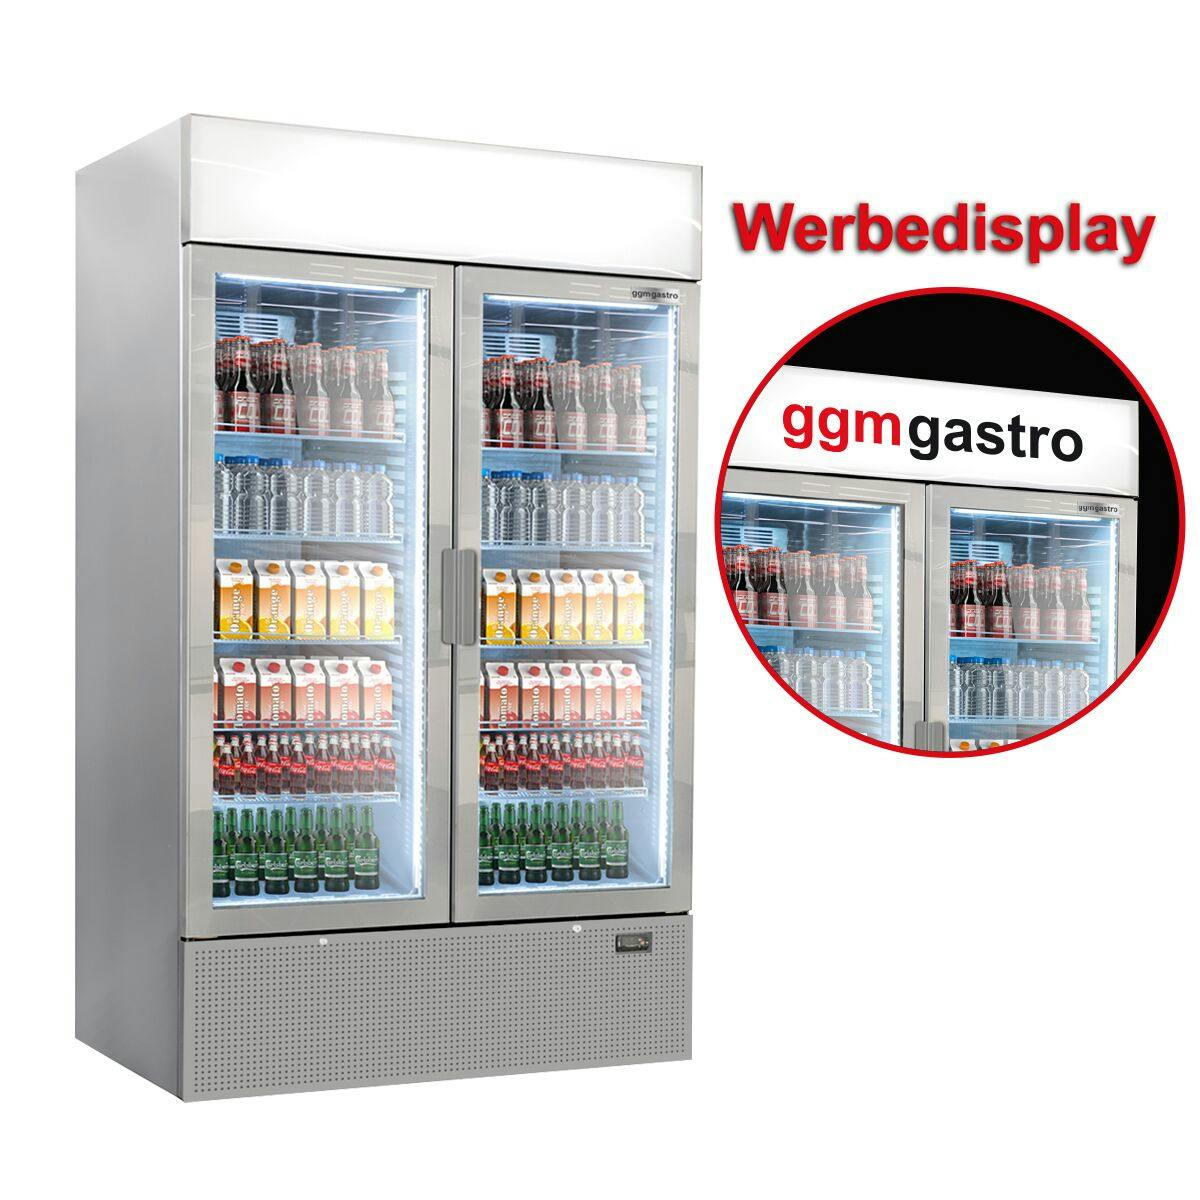 Beverage refrigerator - 1048 litres - frameless design - with advertising display